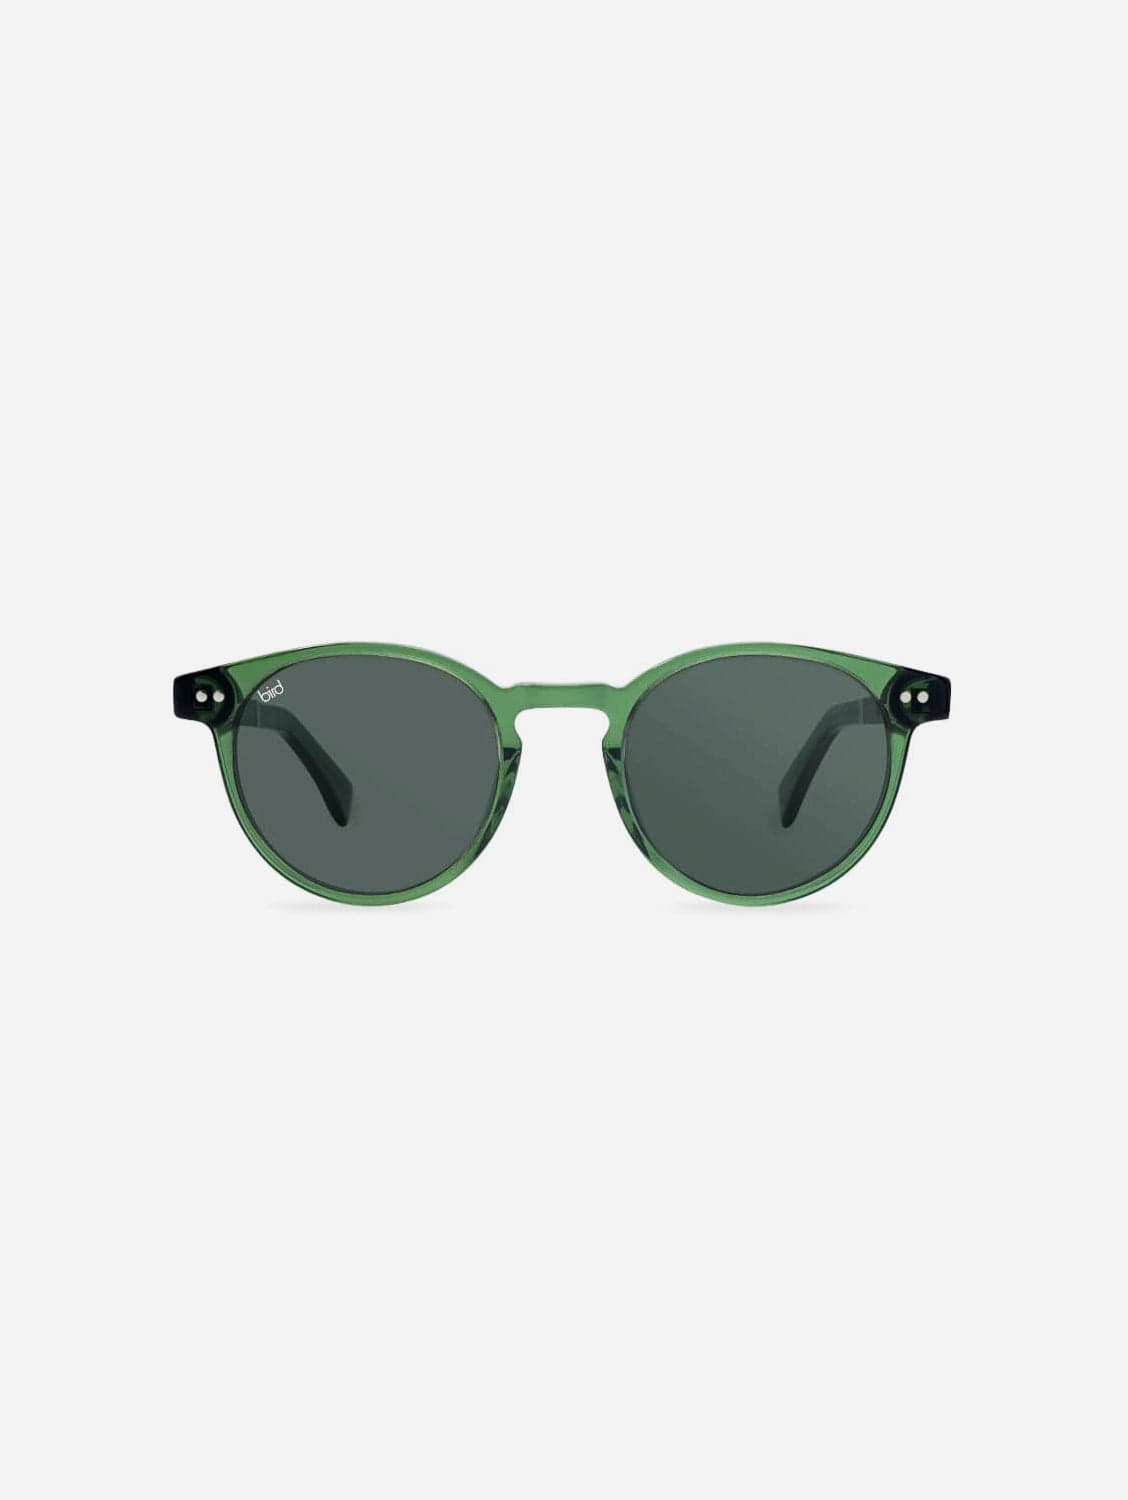 Bird Eyewear Tawny Sustainable Bio-Acetate Sunglasses | Olive Green